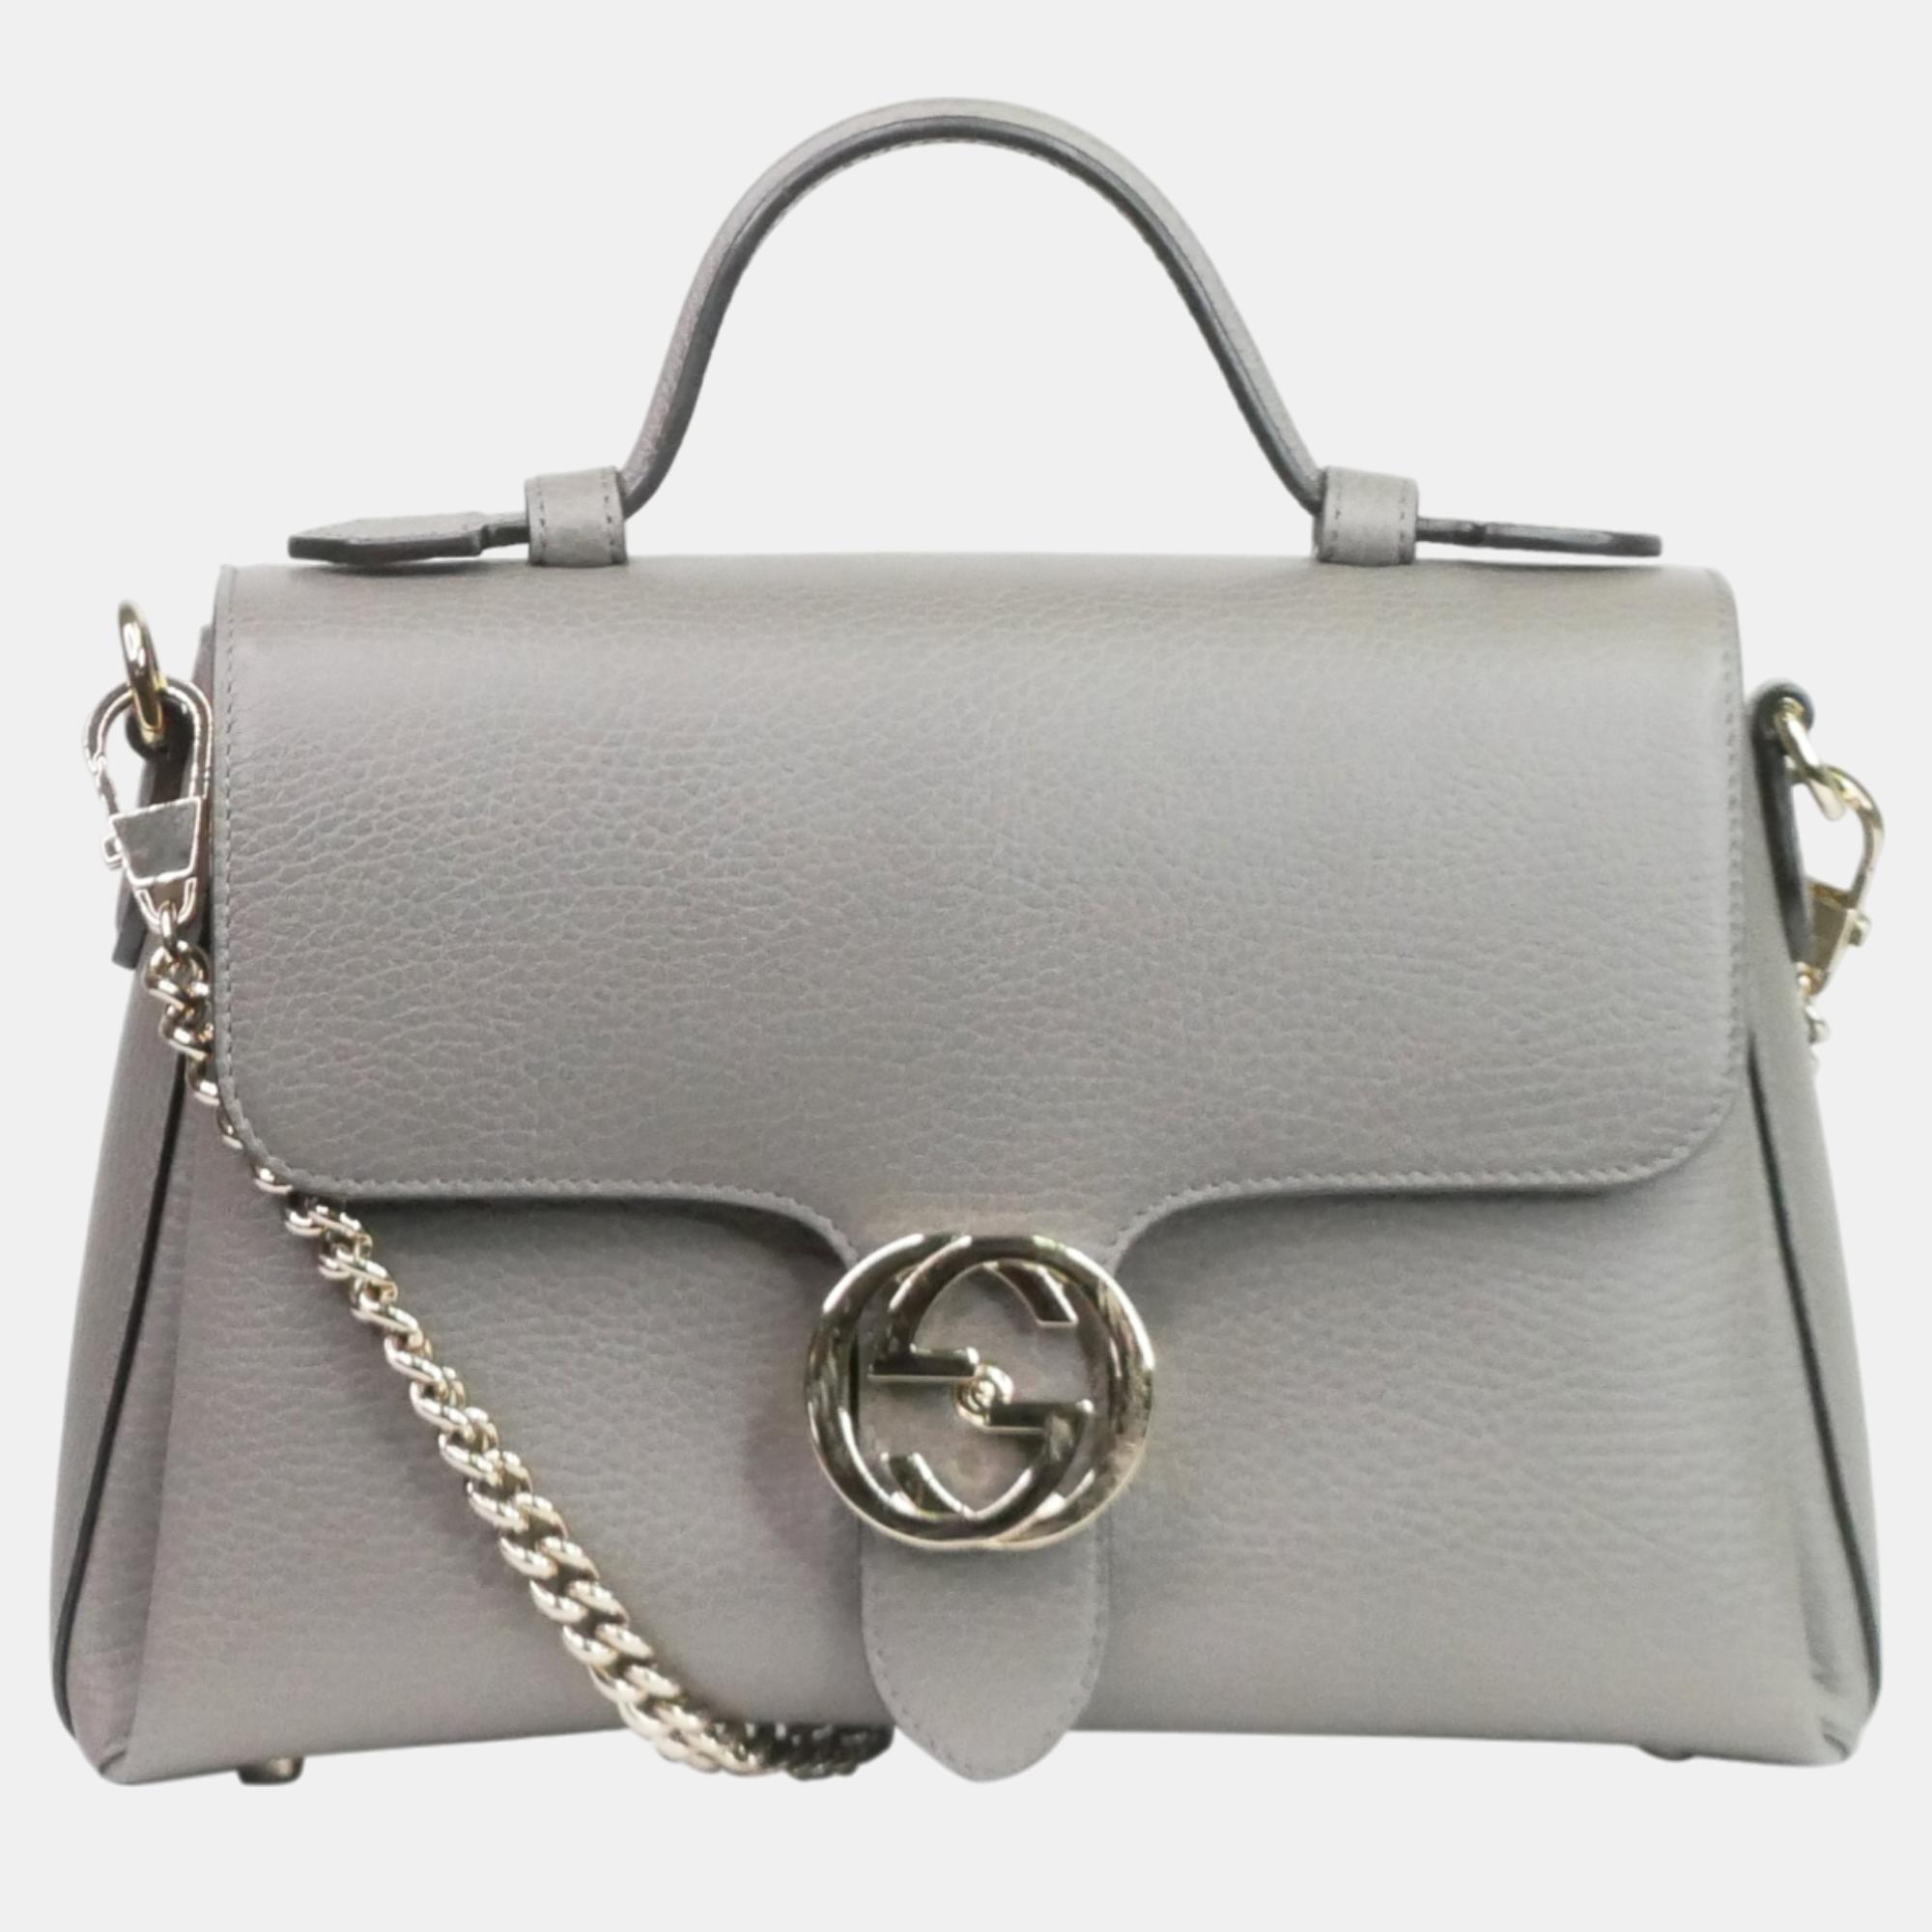 Gucci grey leather medium dollar interlocking g top handle bag